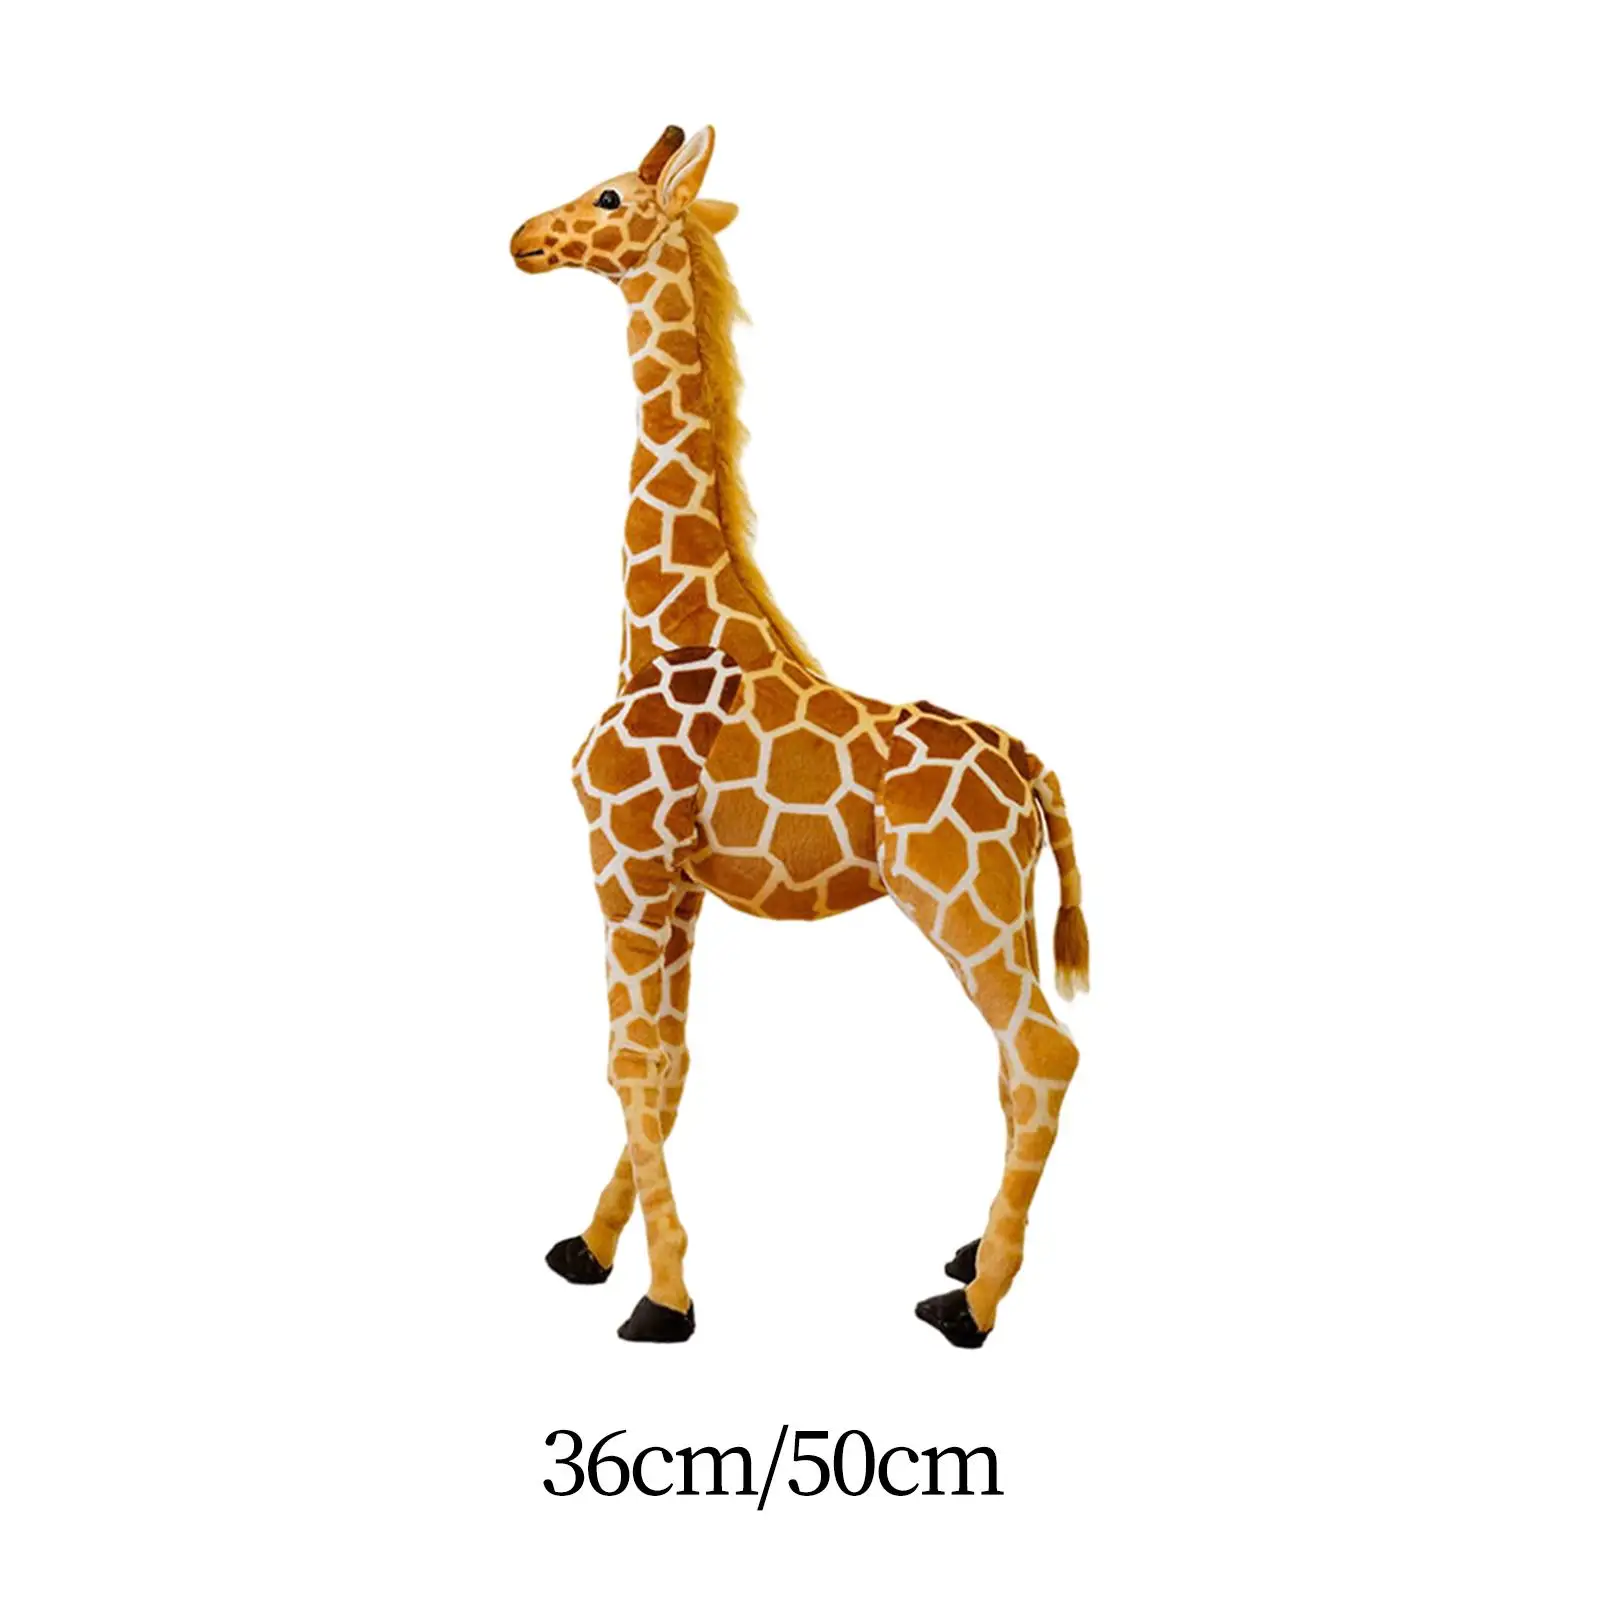 Kids Plush Giraffe Toy Pet Baby Toy Plush Pillow for Preschool Bedroom Kids